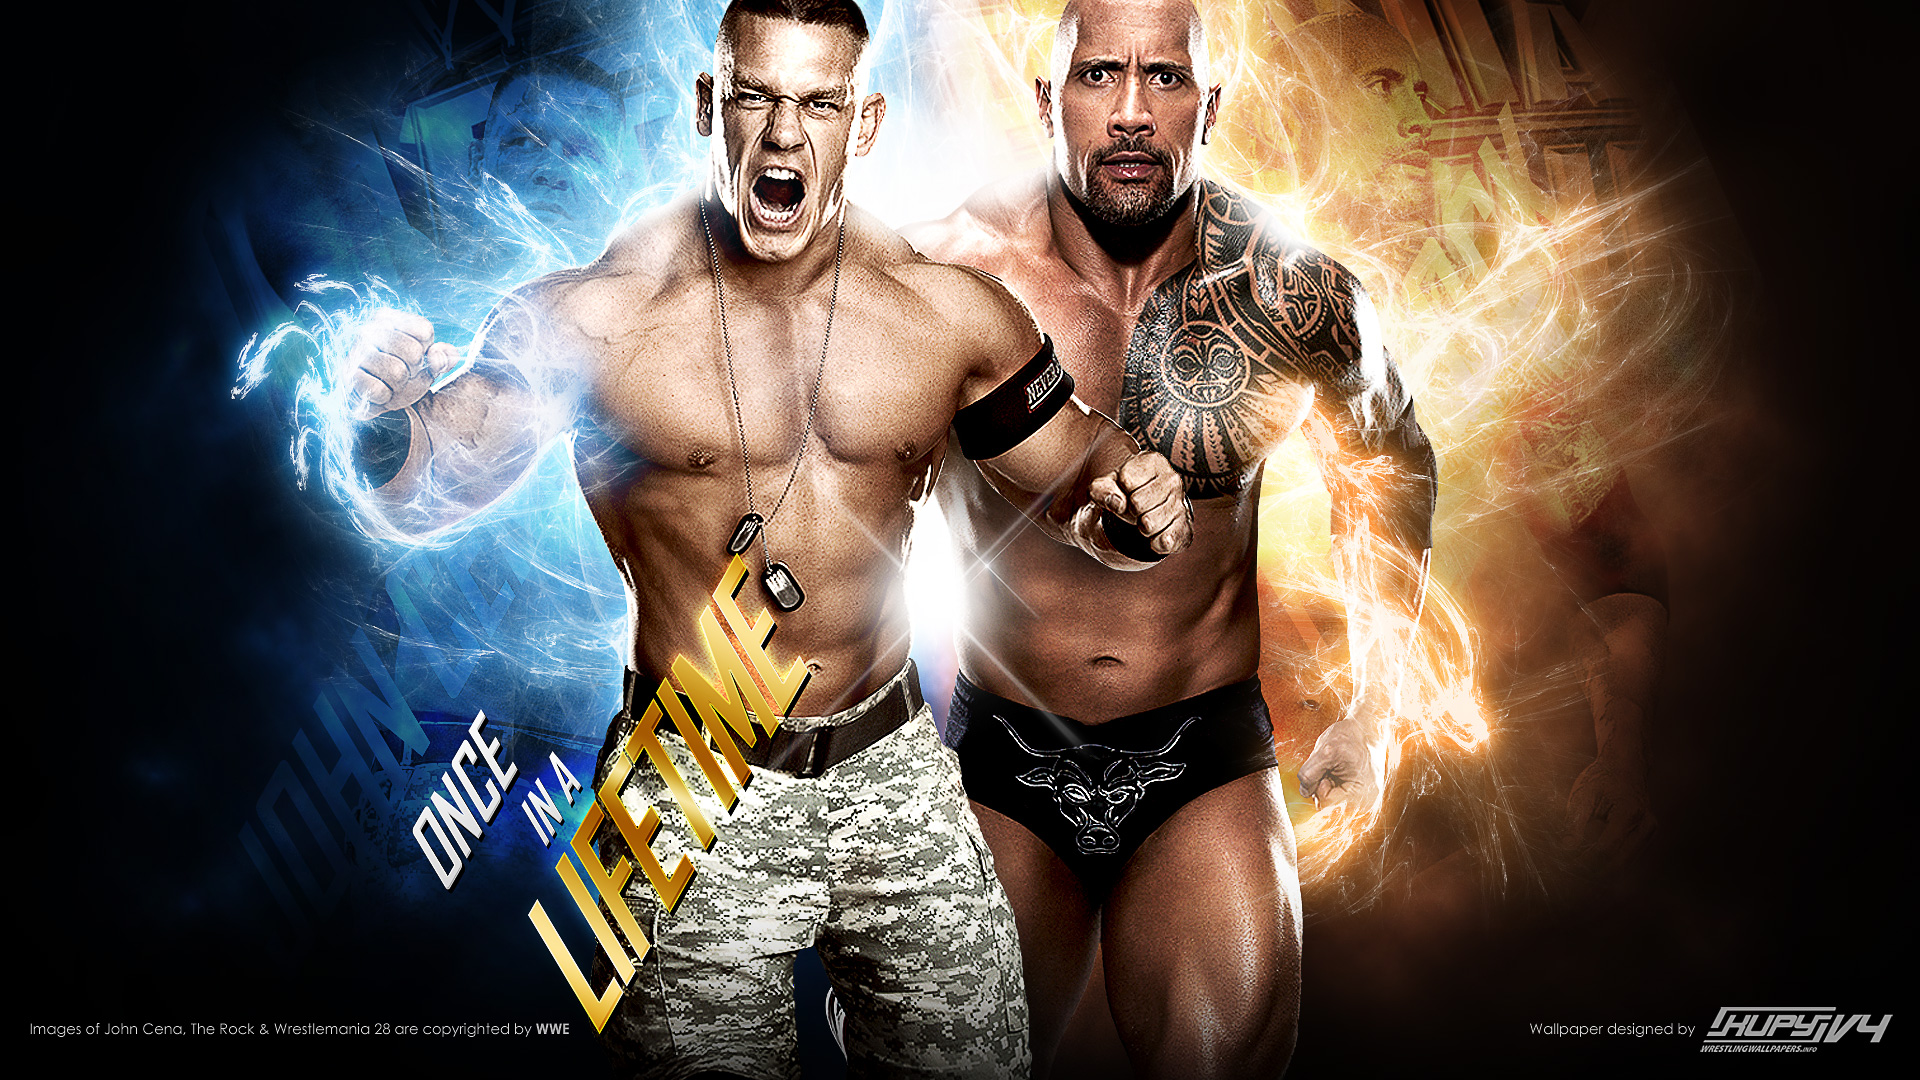 J & R - John Cena & Randy Orton hình nền (15867132) - fanpop - Page 7